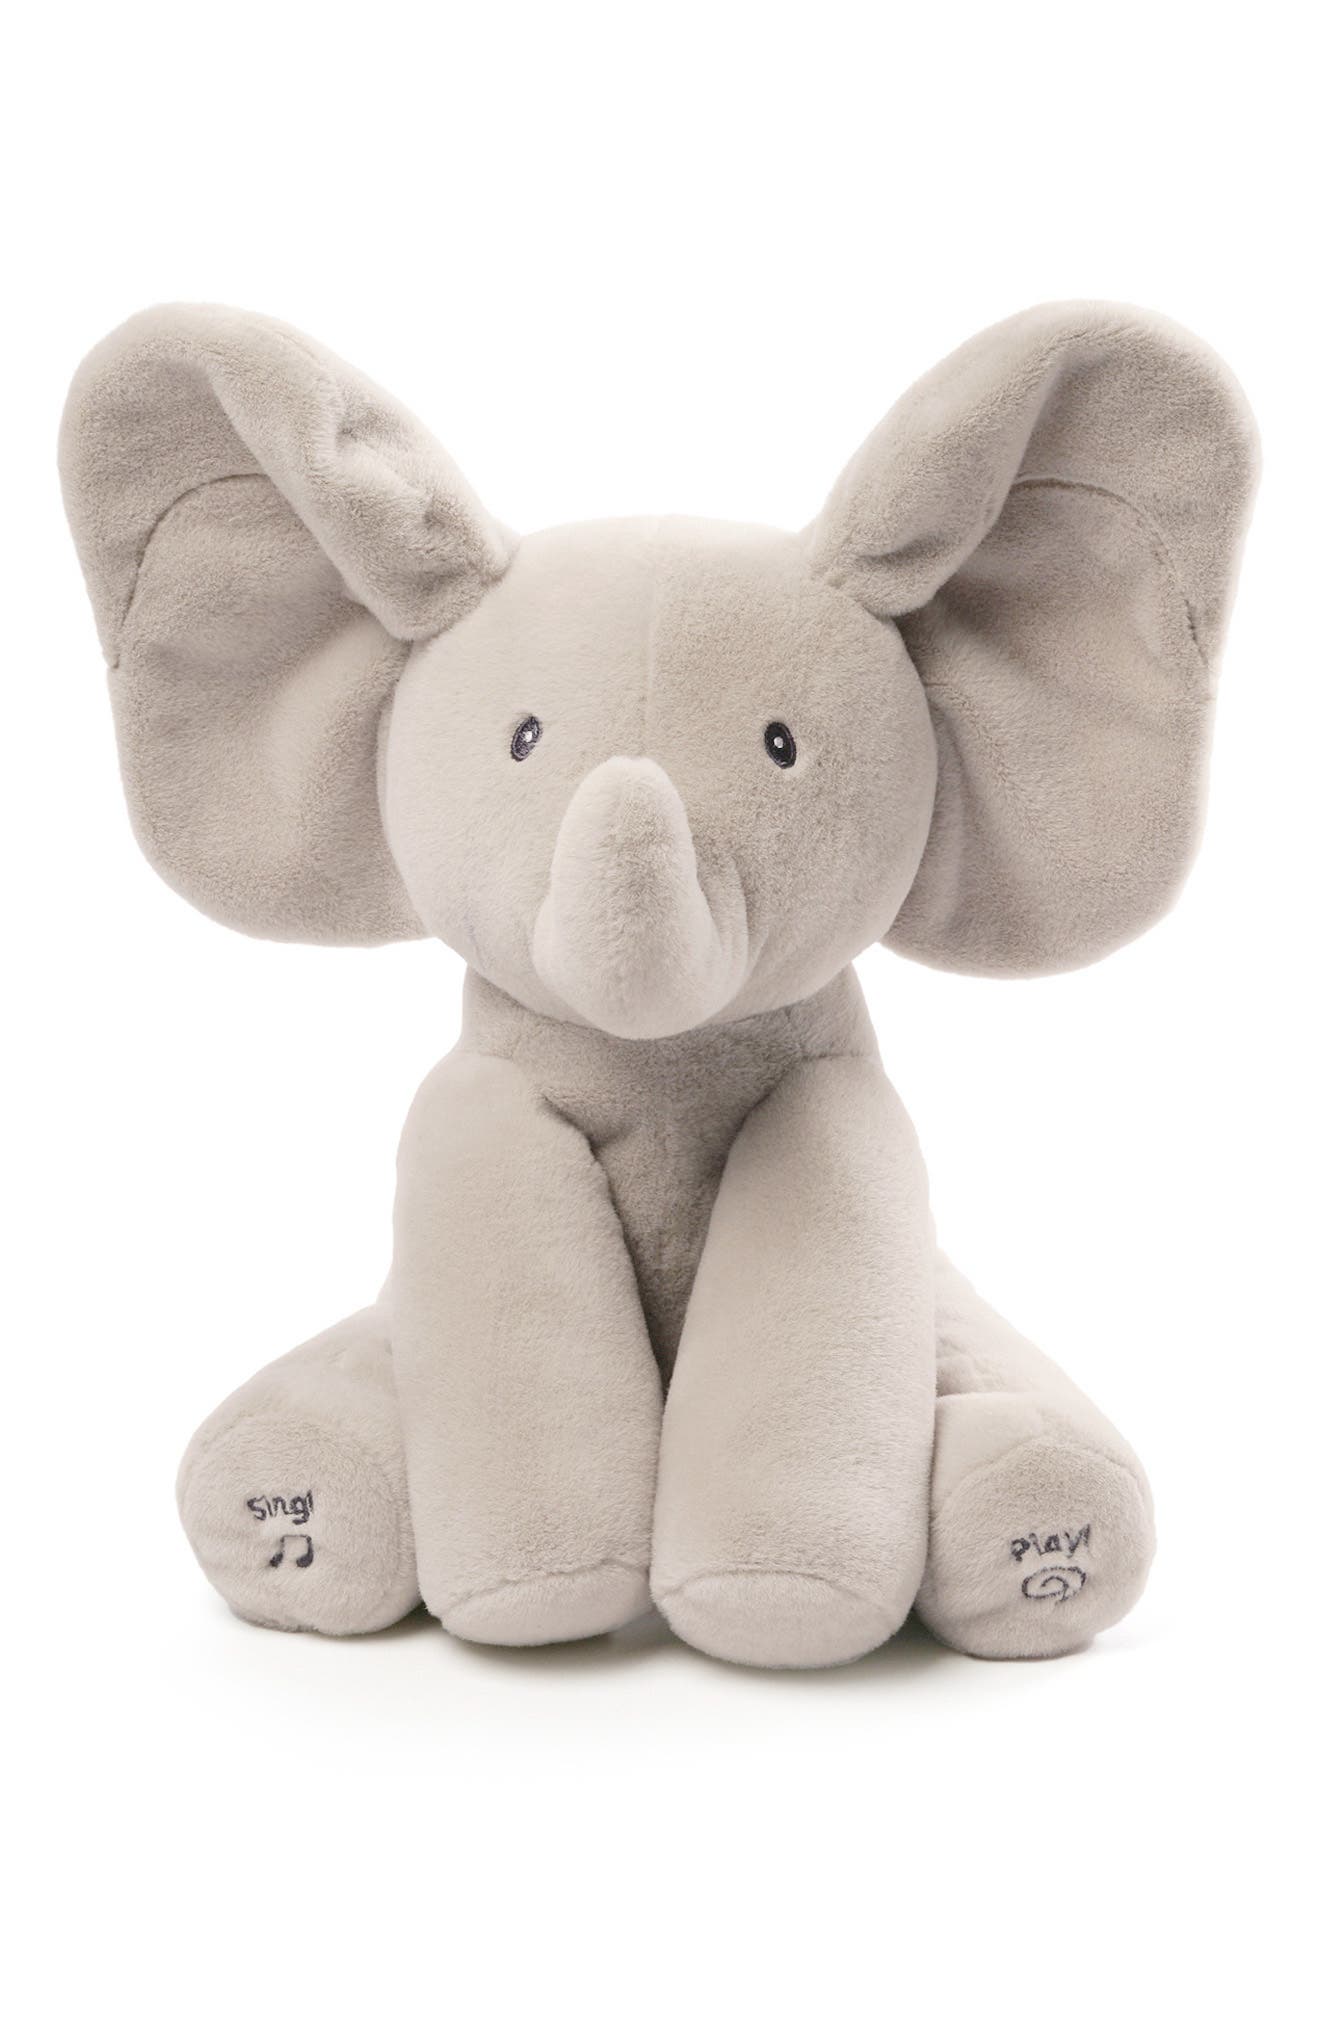 11" Stephan Baby Plush Elephant Paci-Holder Gray/Pink